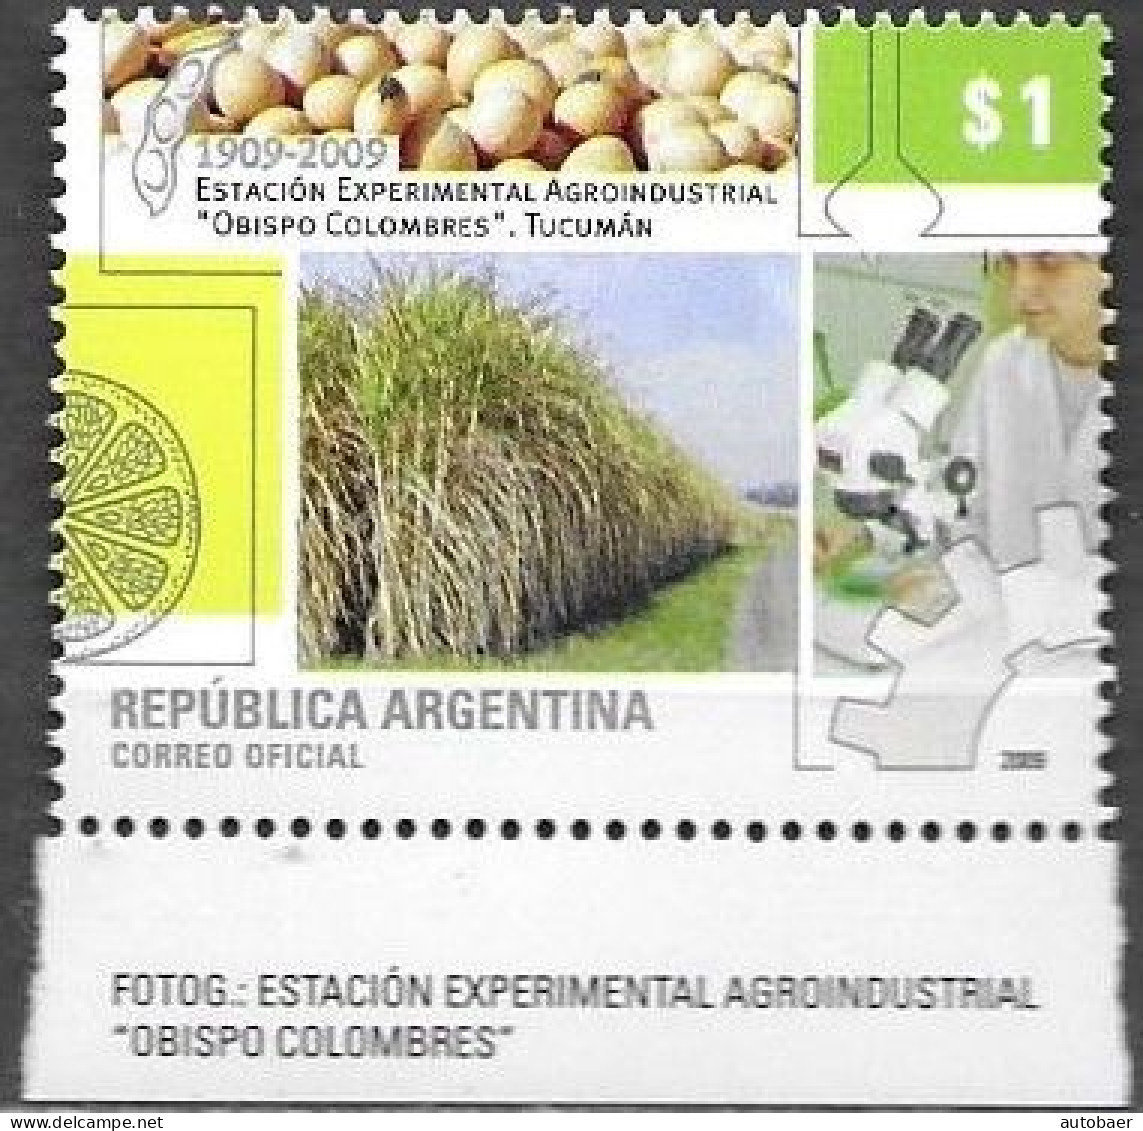 Argentina 2009 Agroindustrial Station Estacion Bishop Obispo Colombres Tucuman Michel 3254 MNH Postfrisch Neuf ** - Unused Stamps